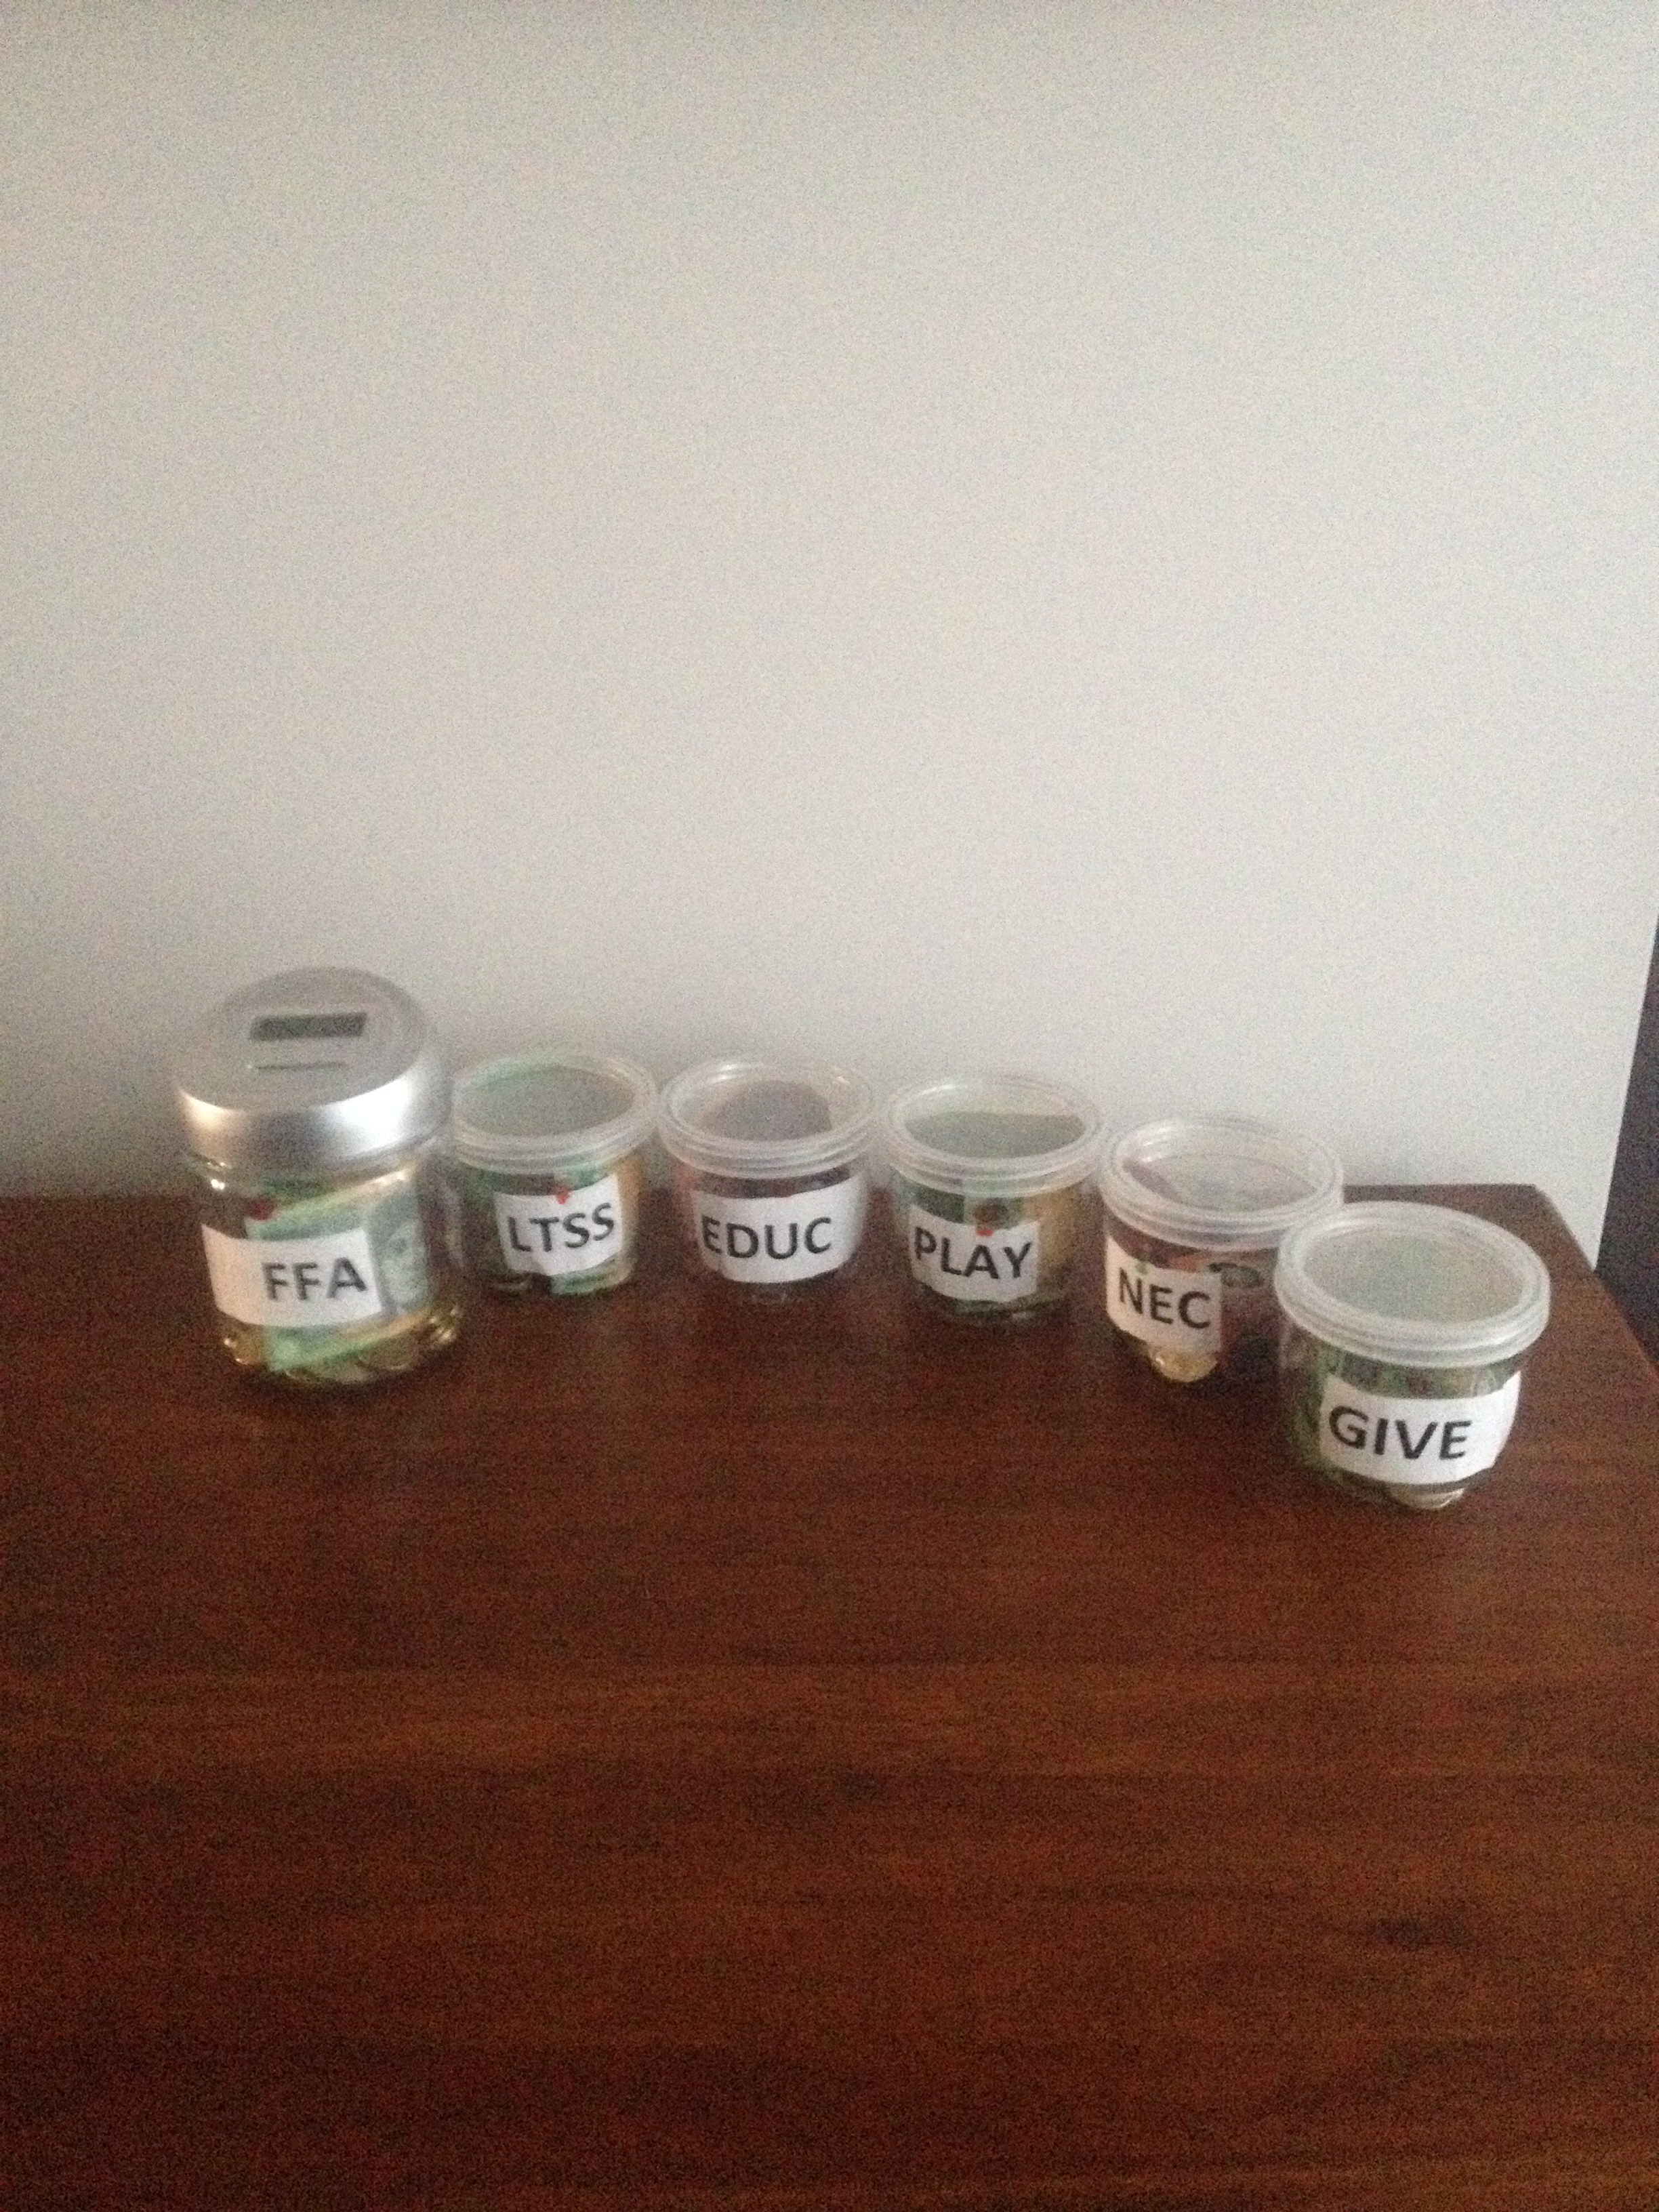 the jar system